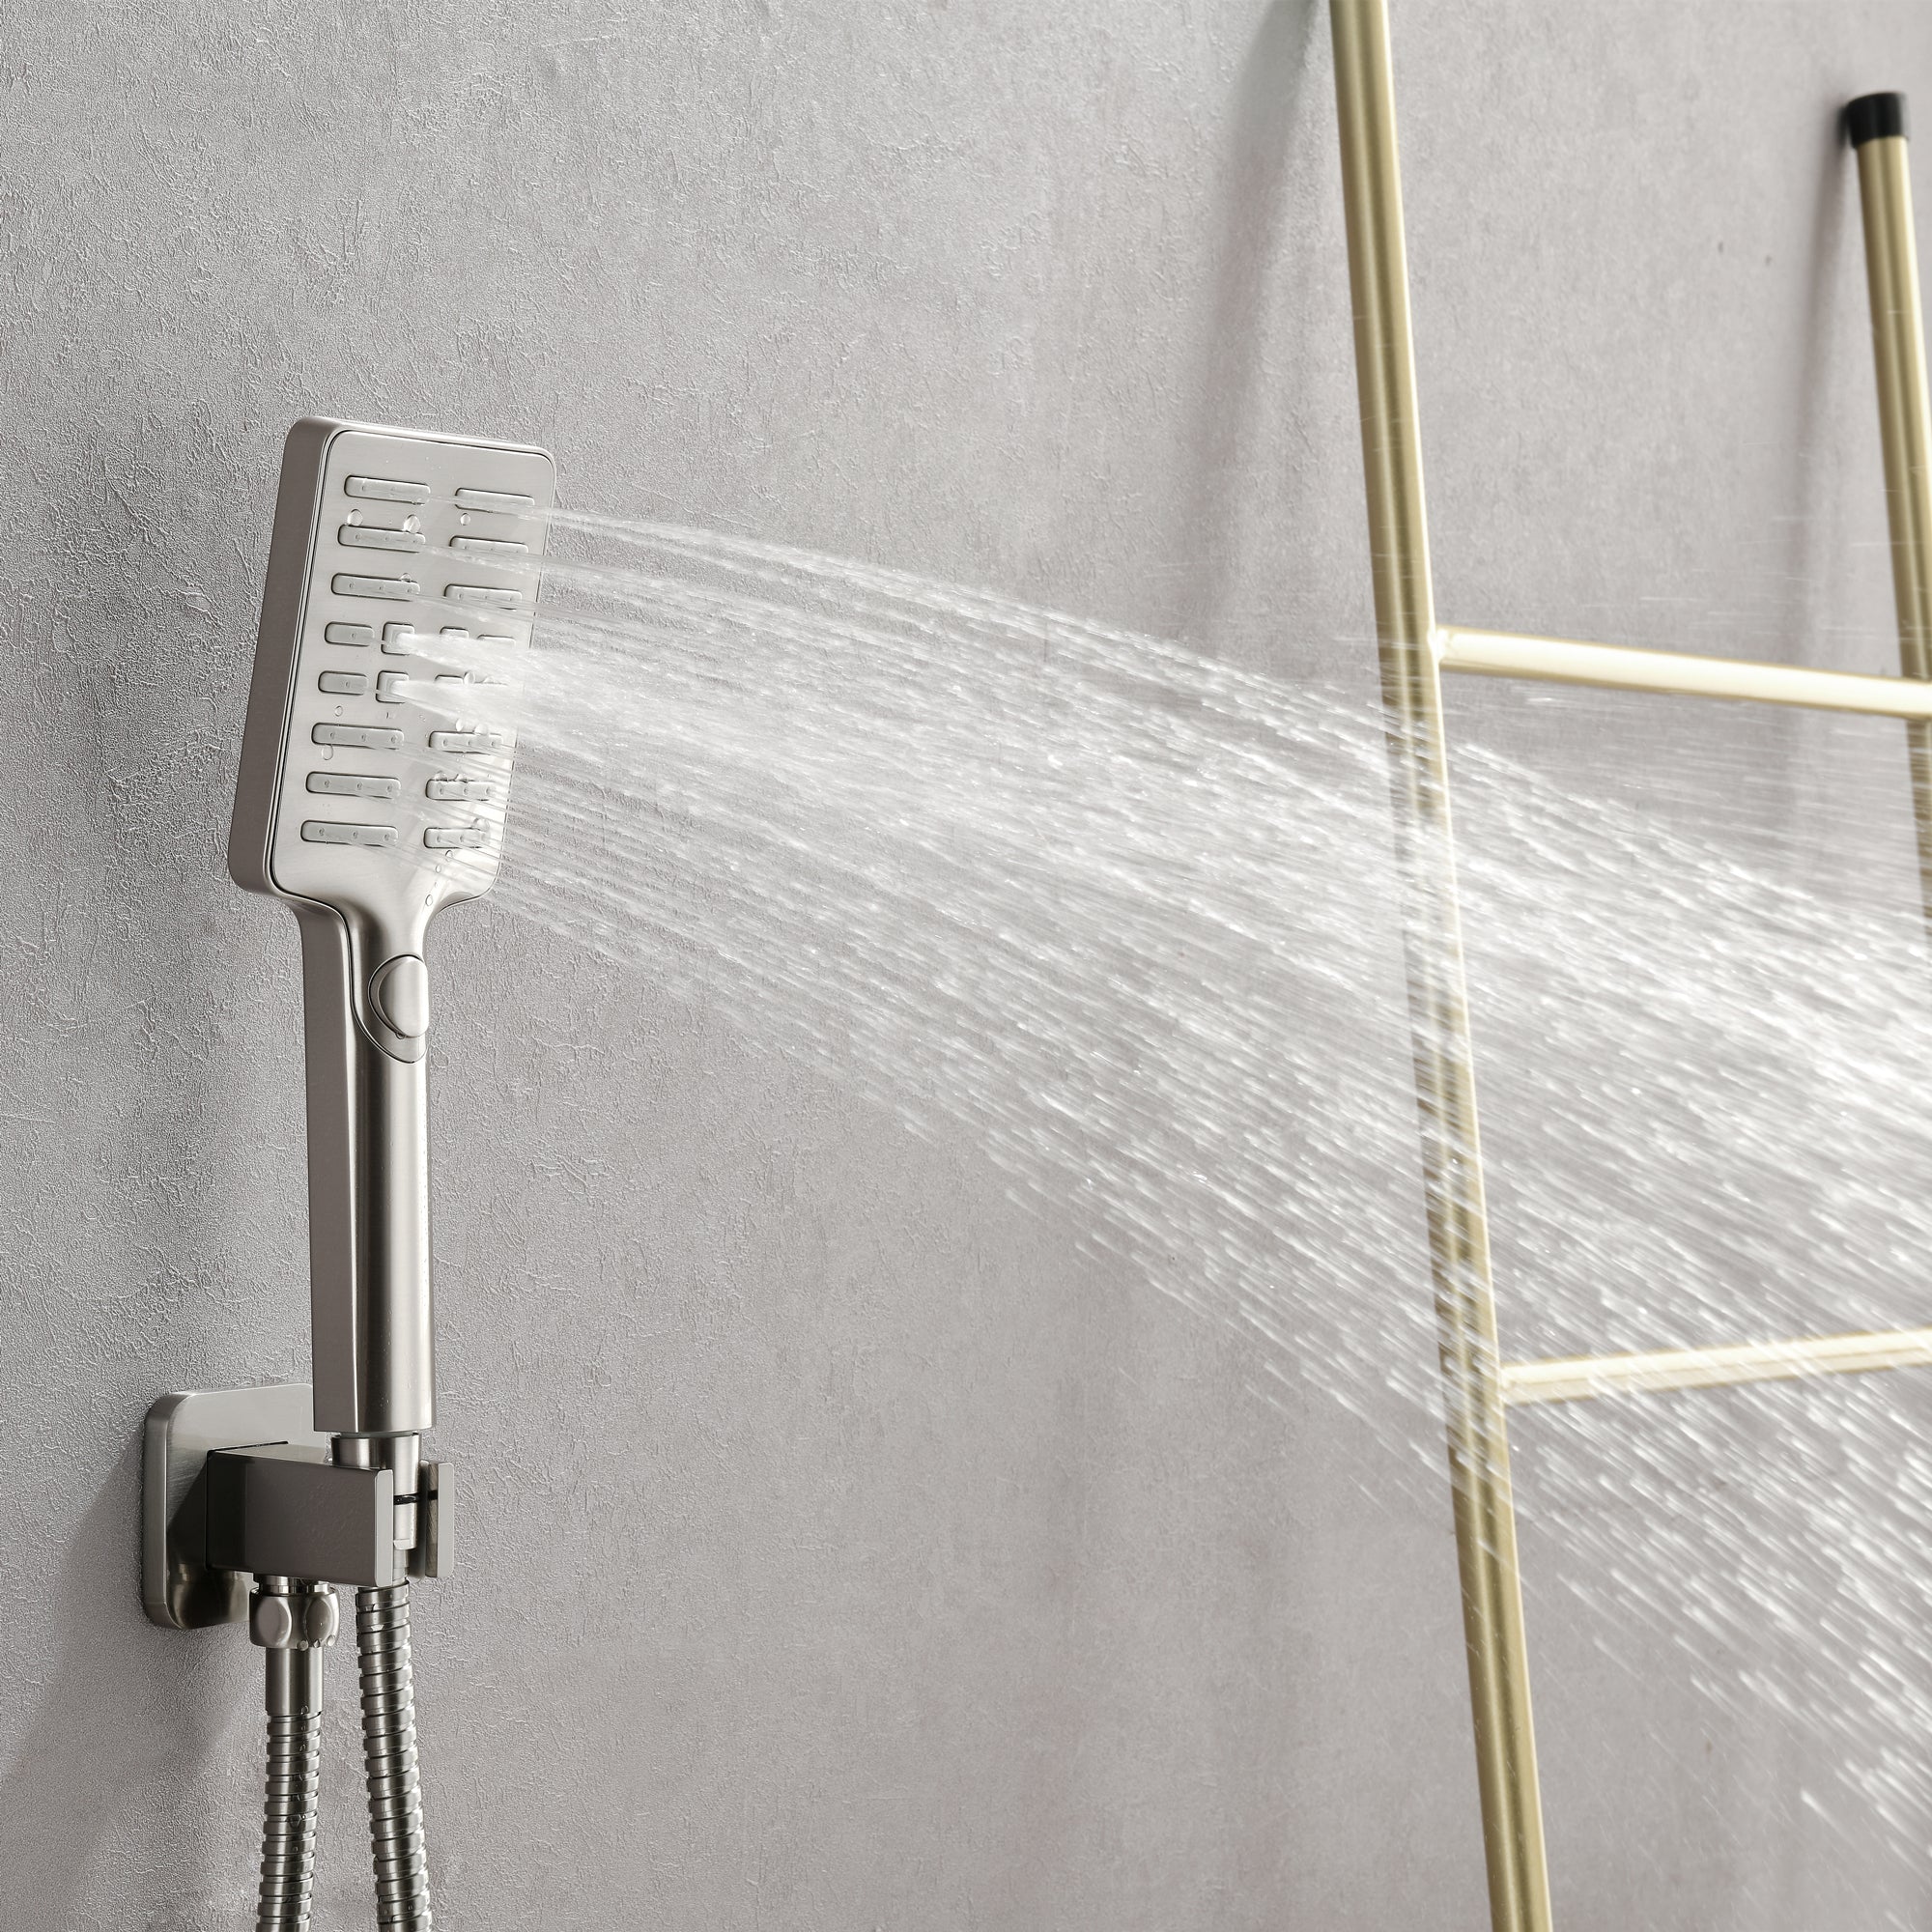 shower head that increases water pressure